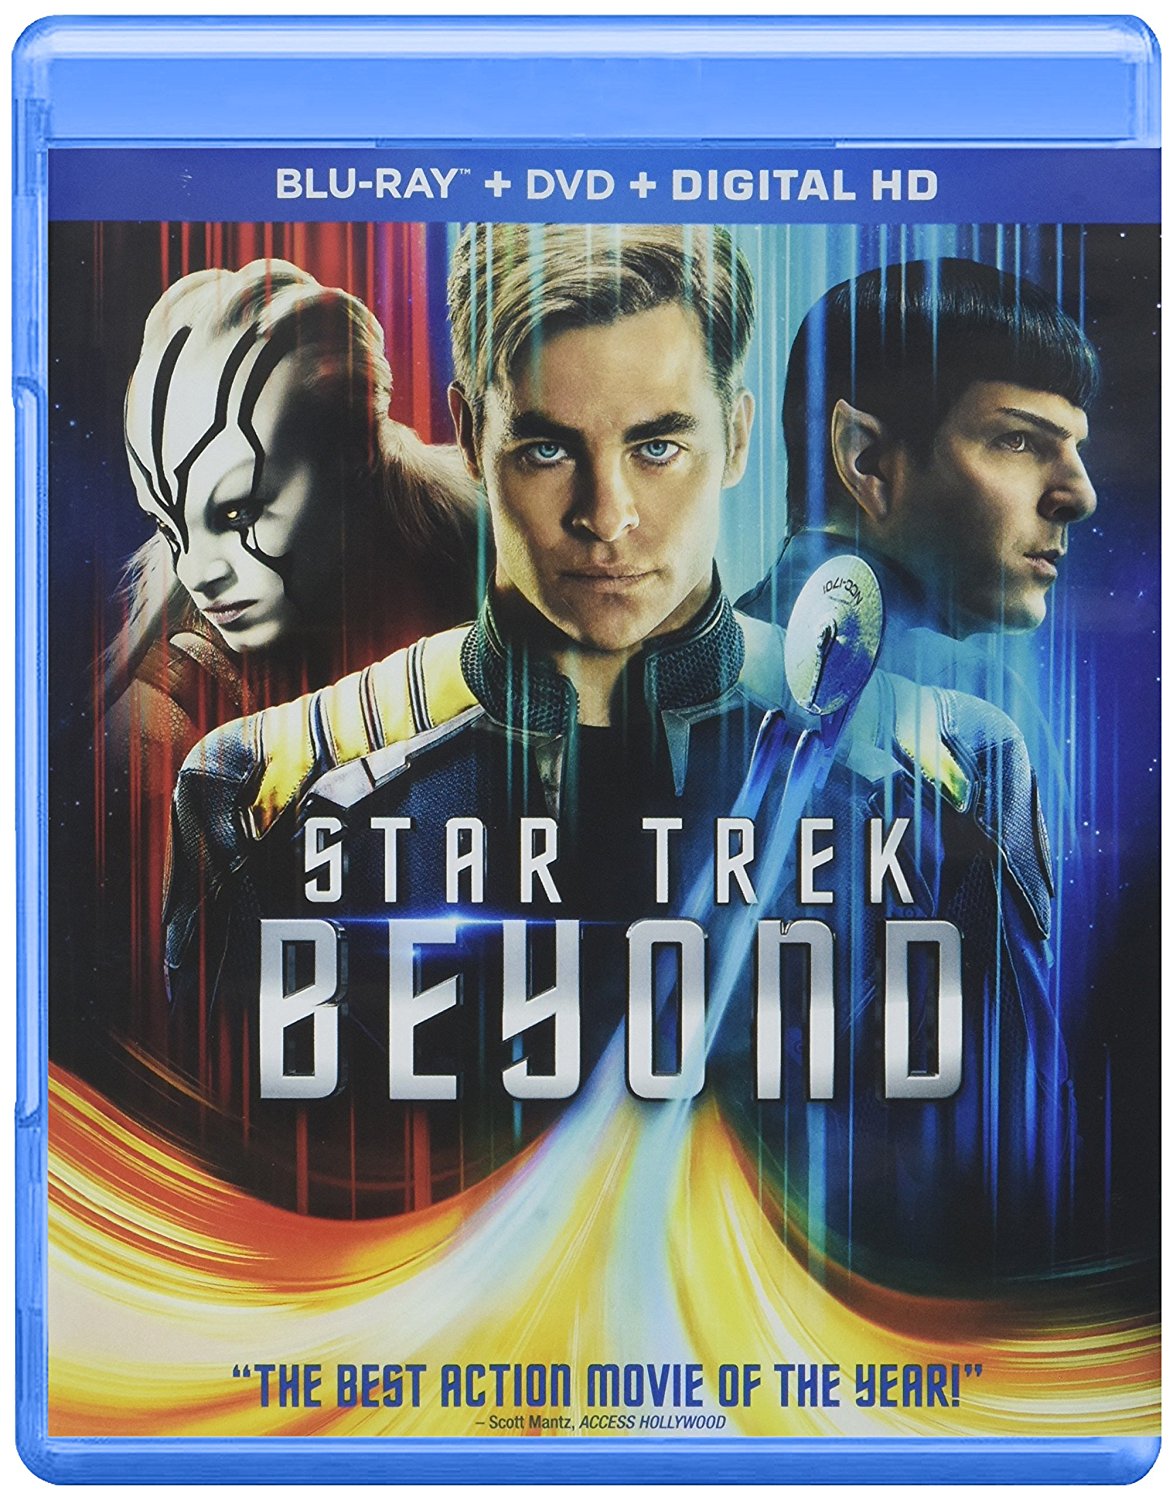 Star Trek Beyond Blu-ray Combo – Just $7.97!